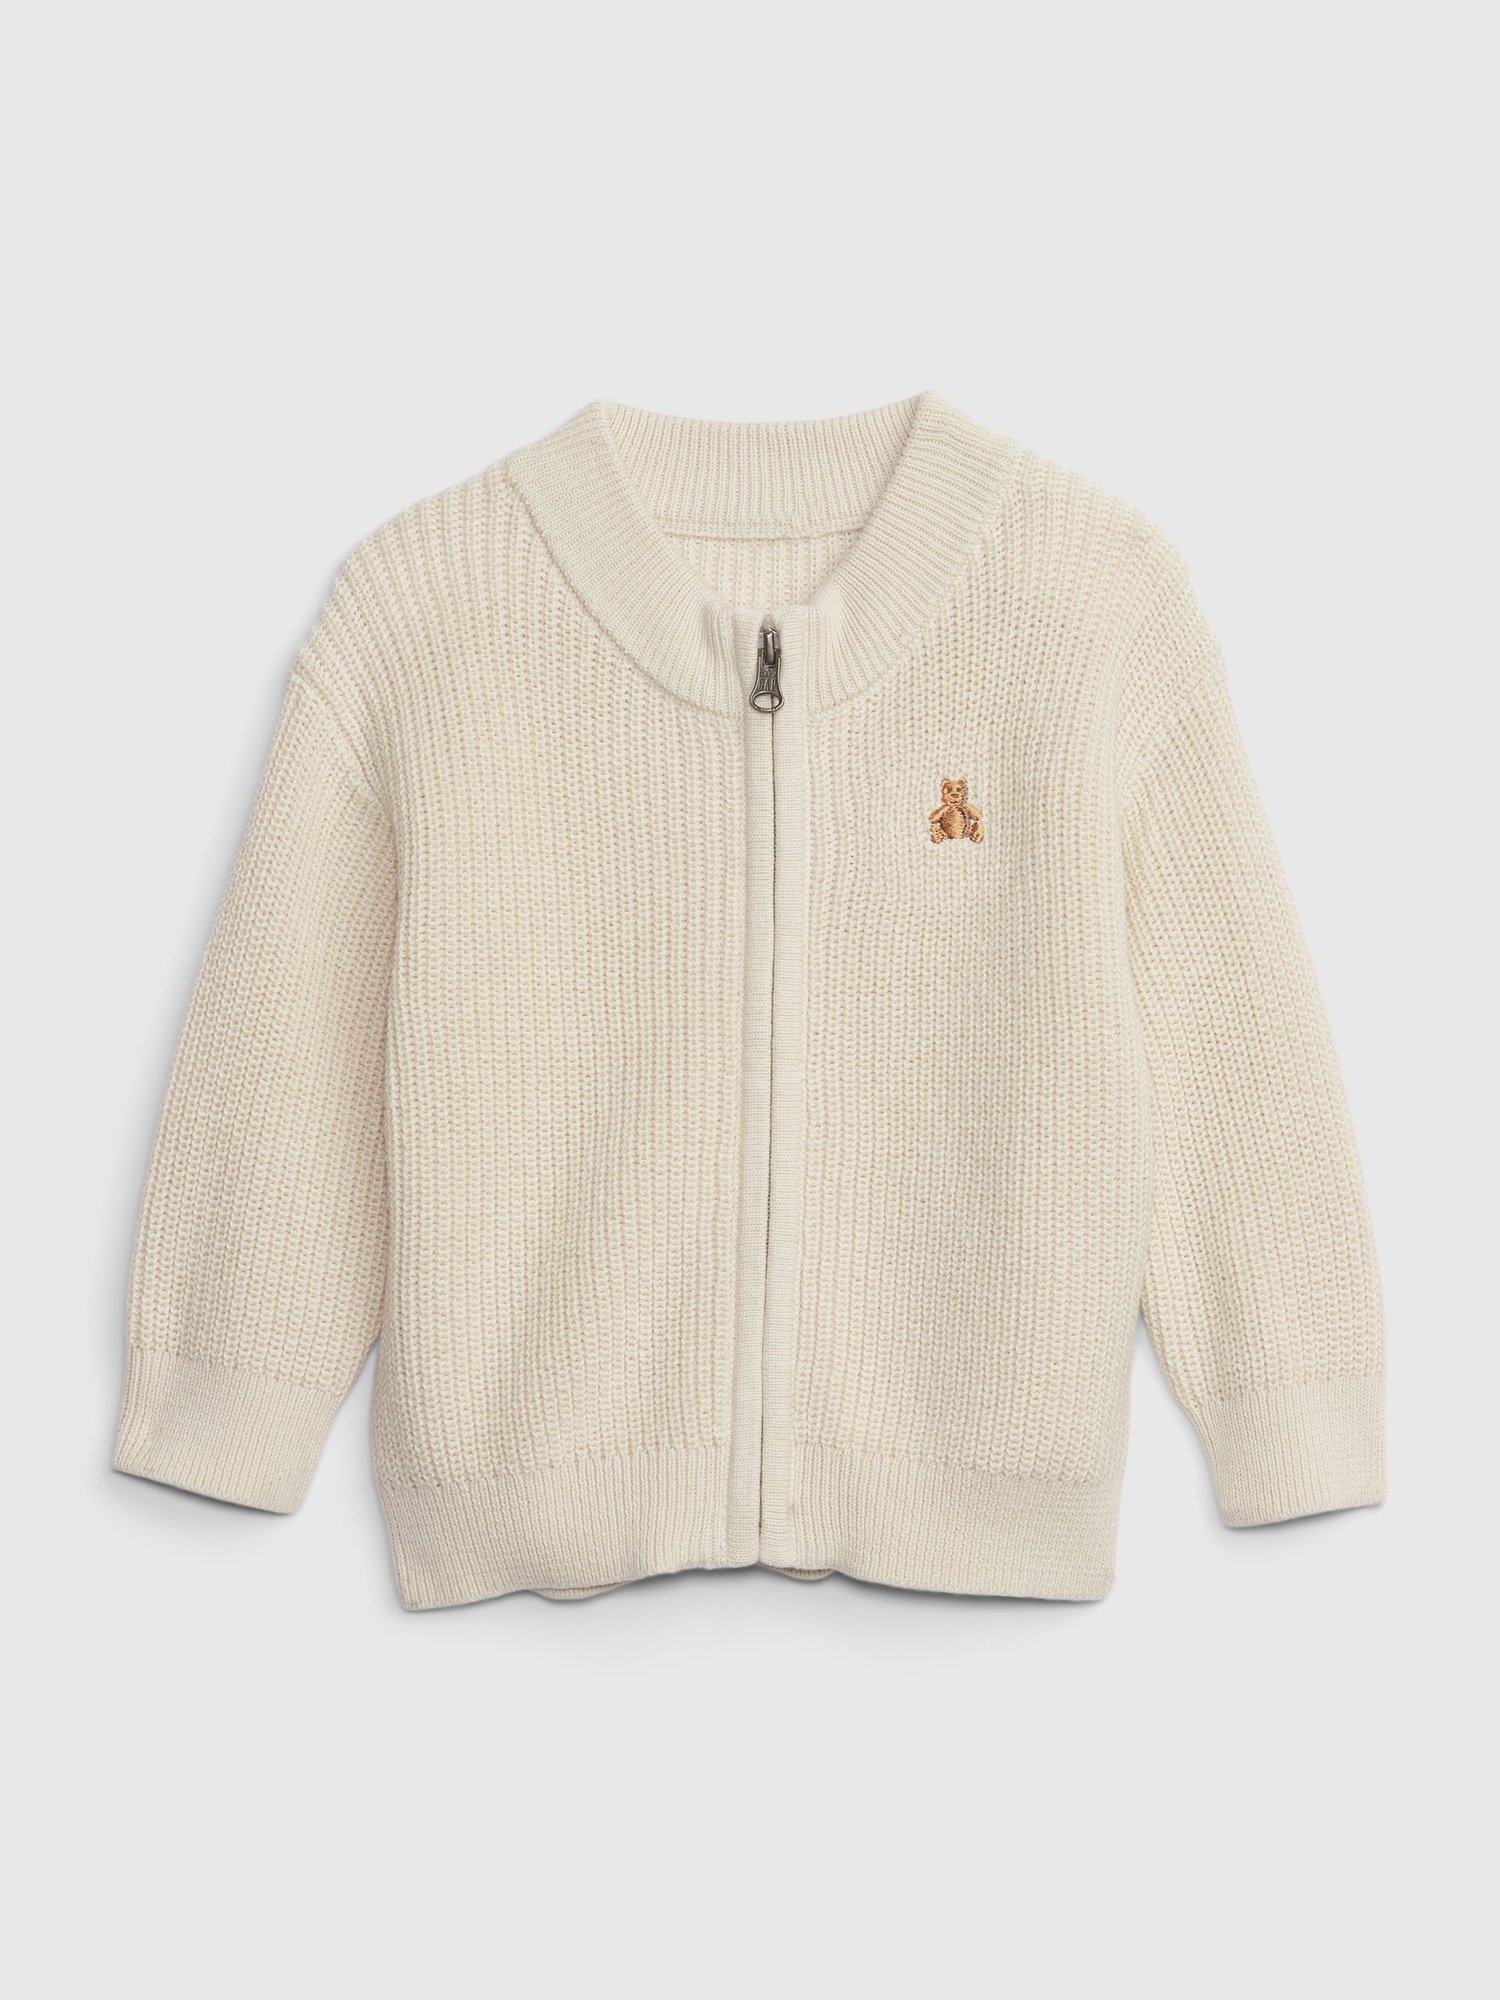 Gap Baby Zip Sweater Cardigan